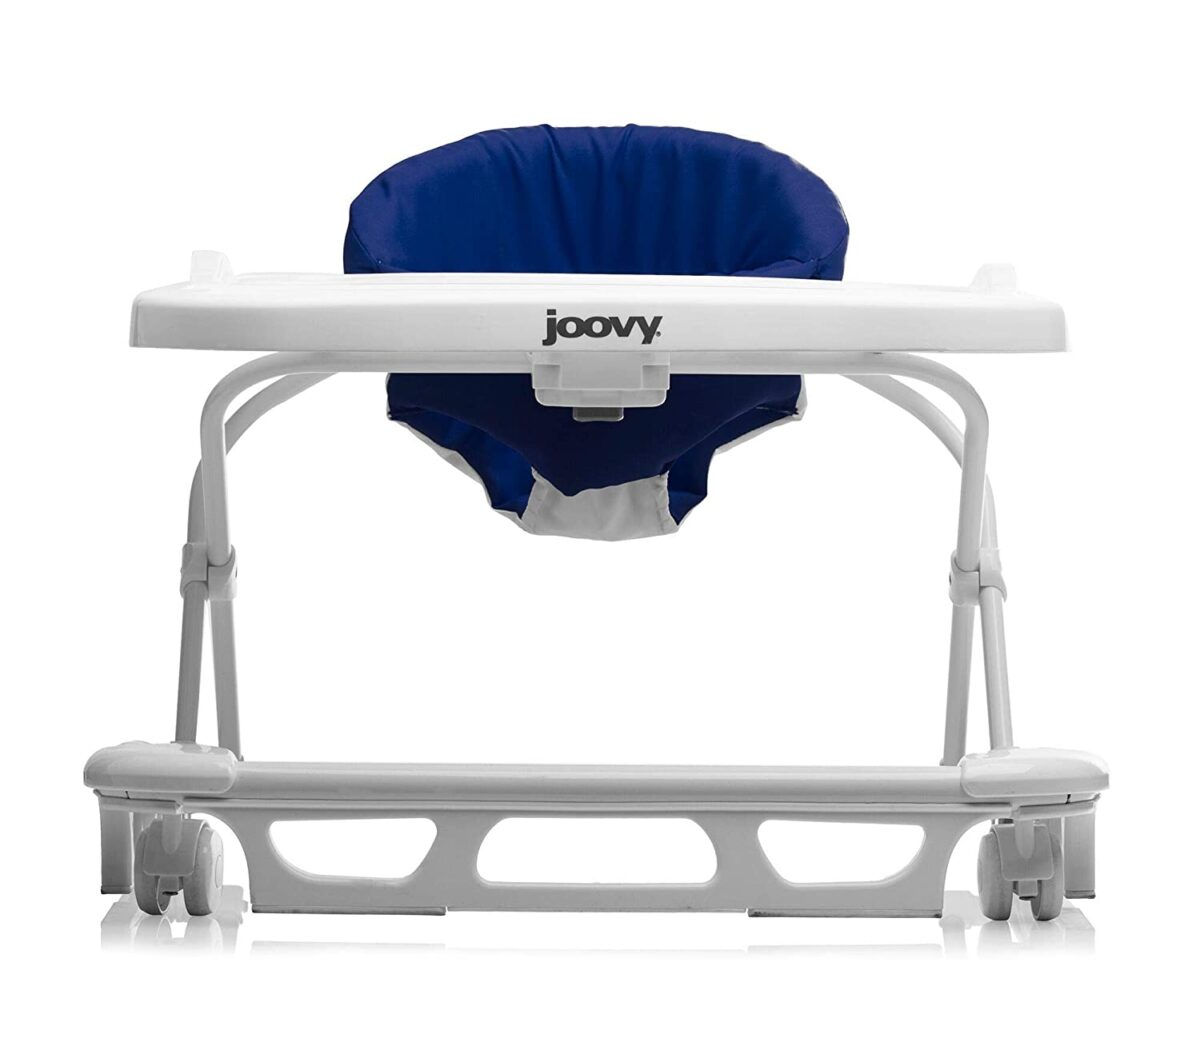 Joovy Spoon Walker Adjustable Baby Walker Activity Center Blueberry